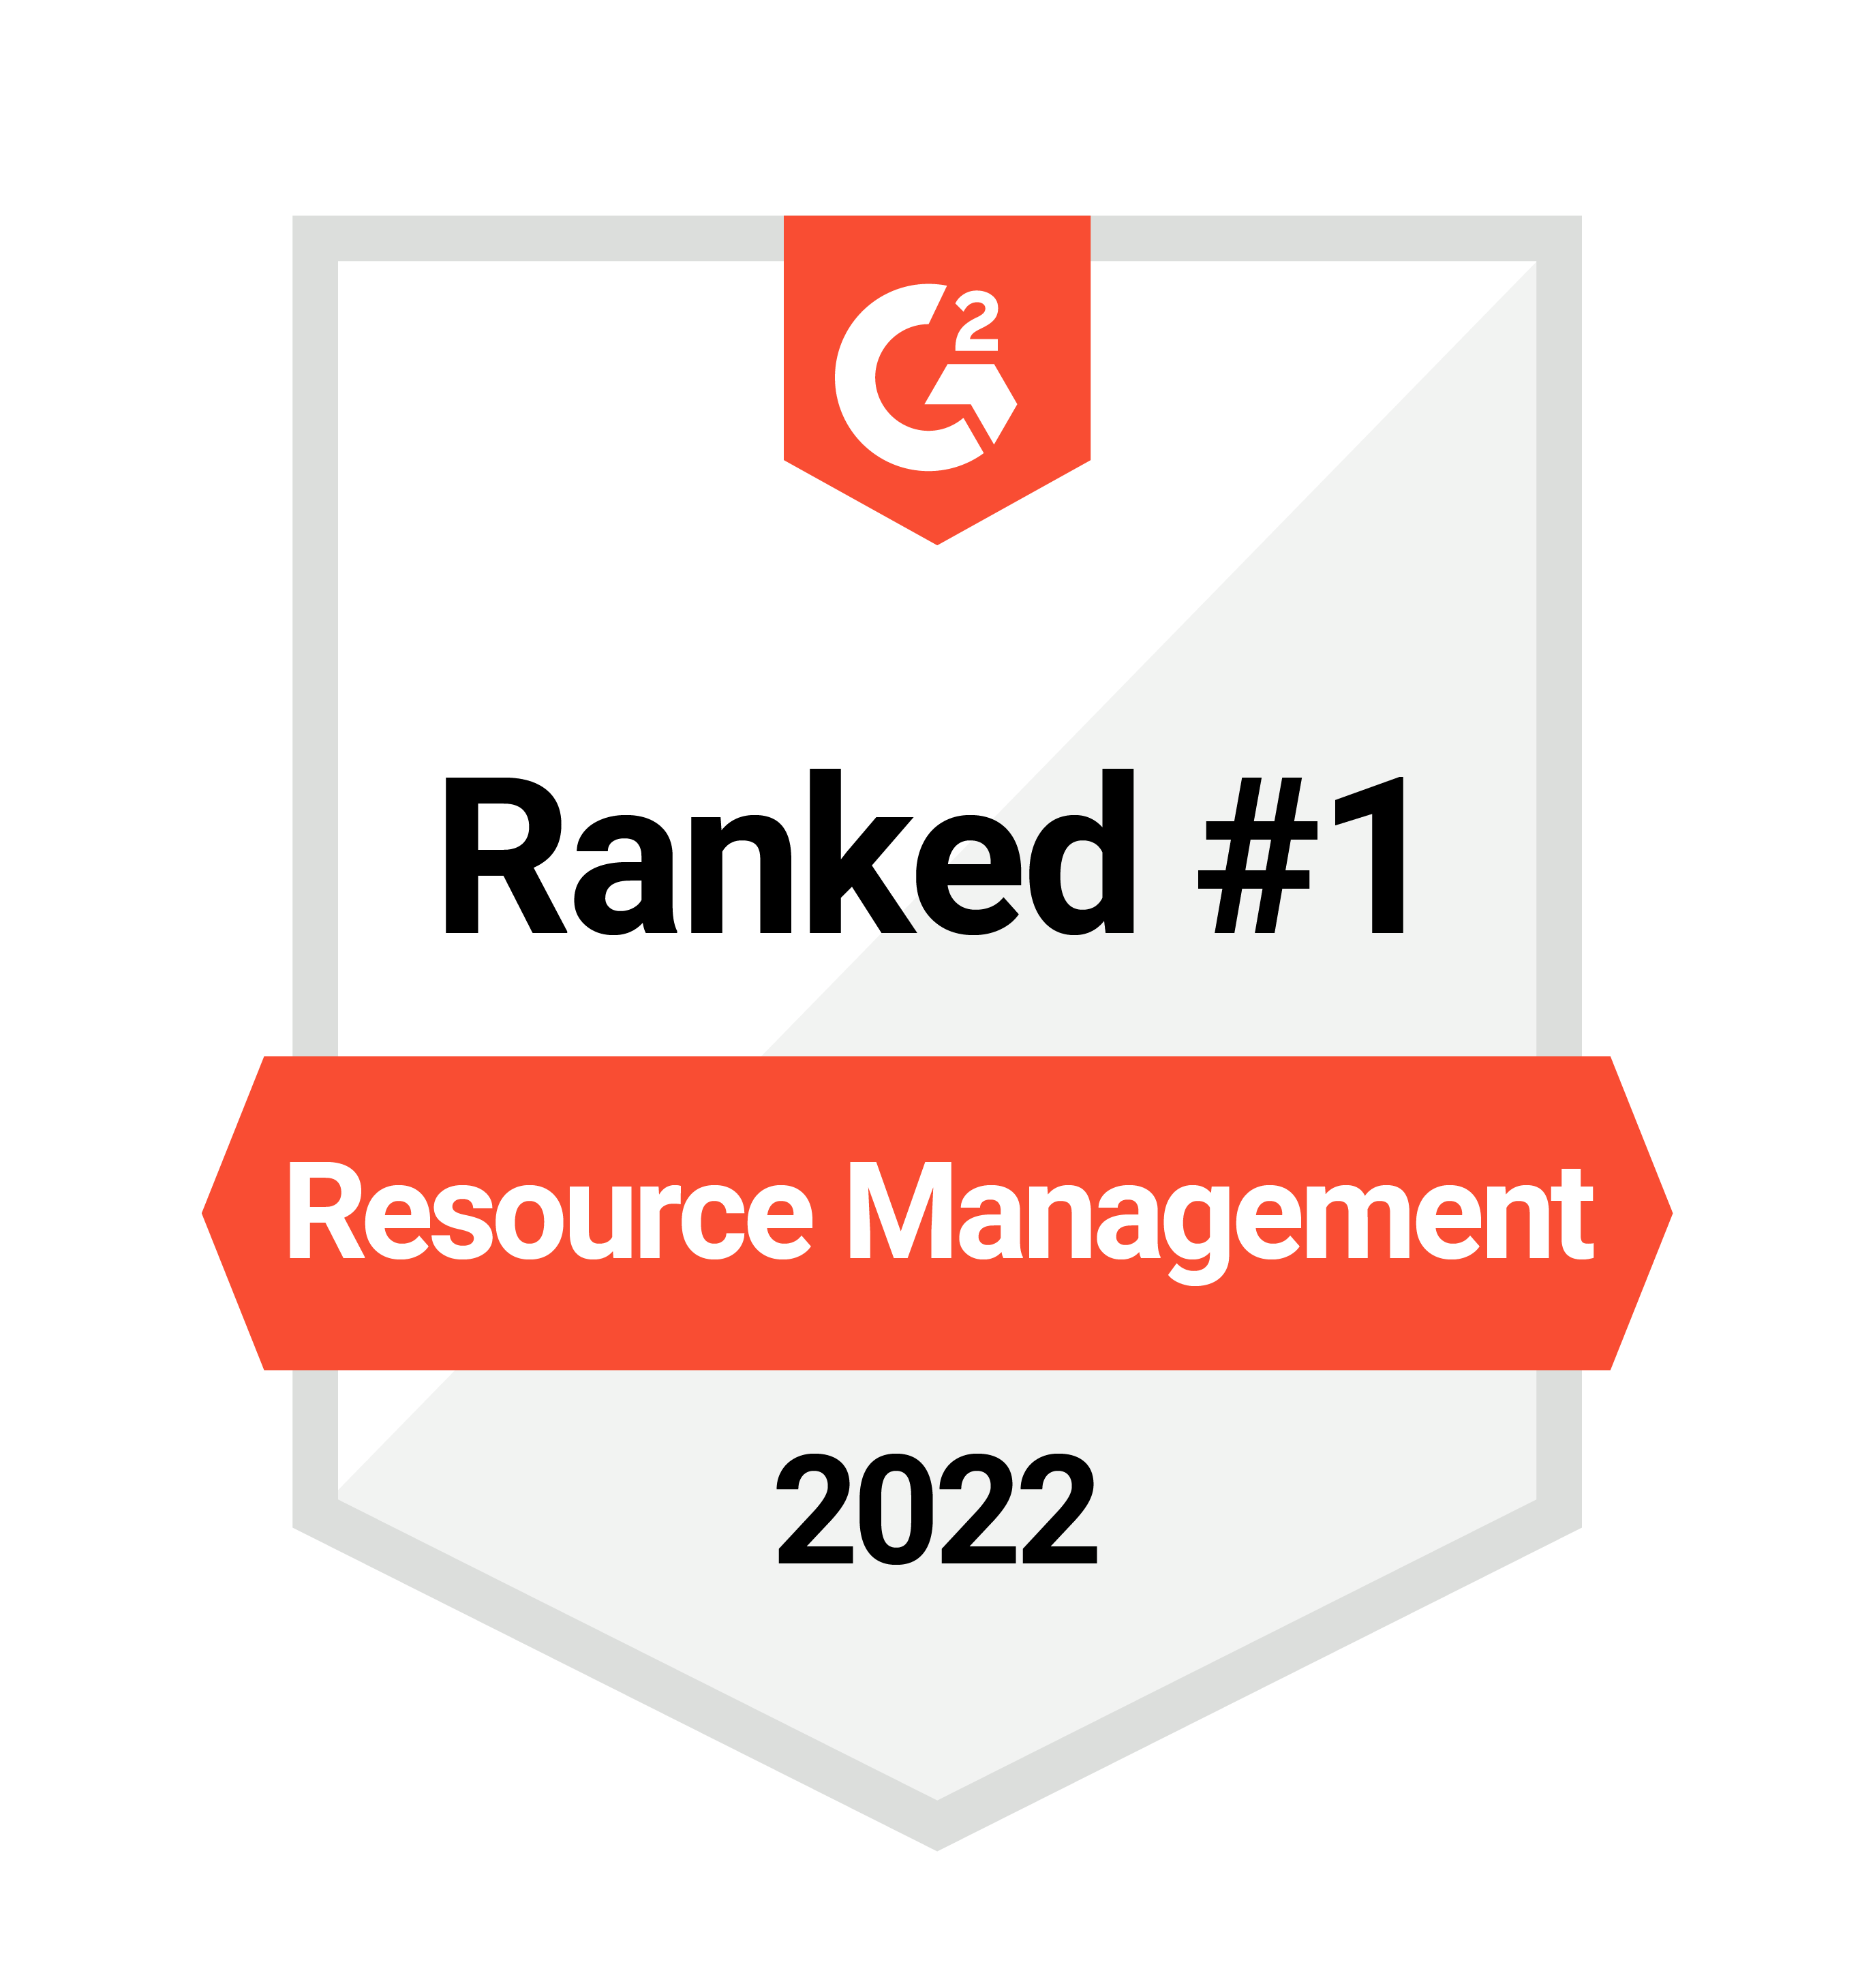 G2 Leader in Resource Management